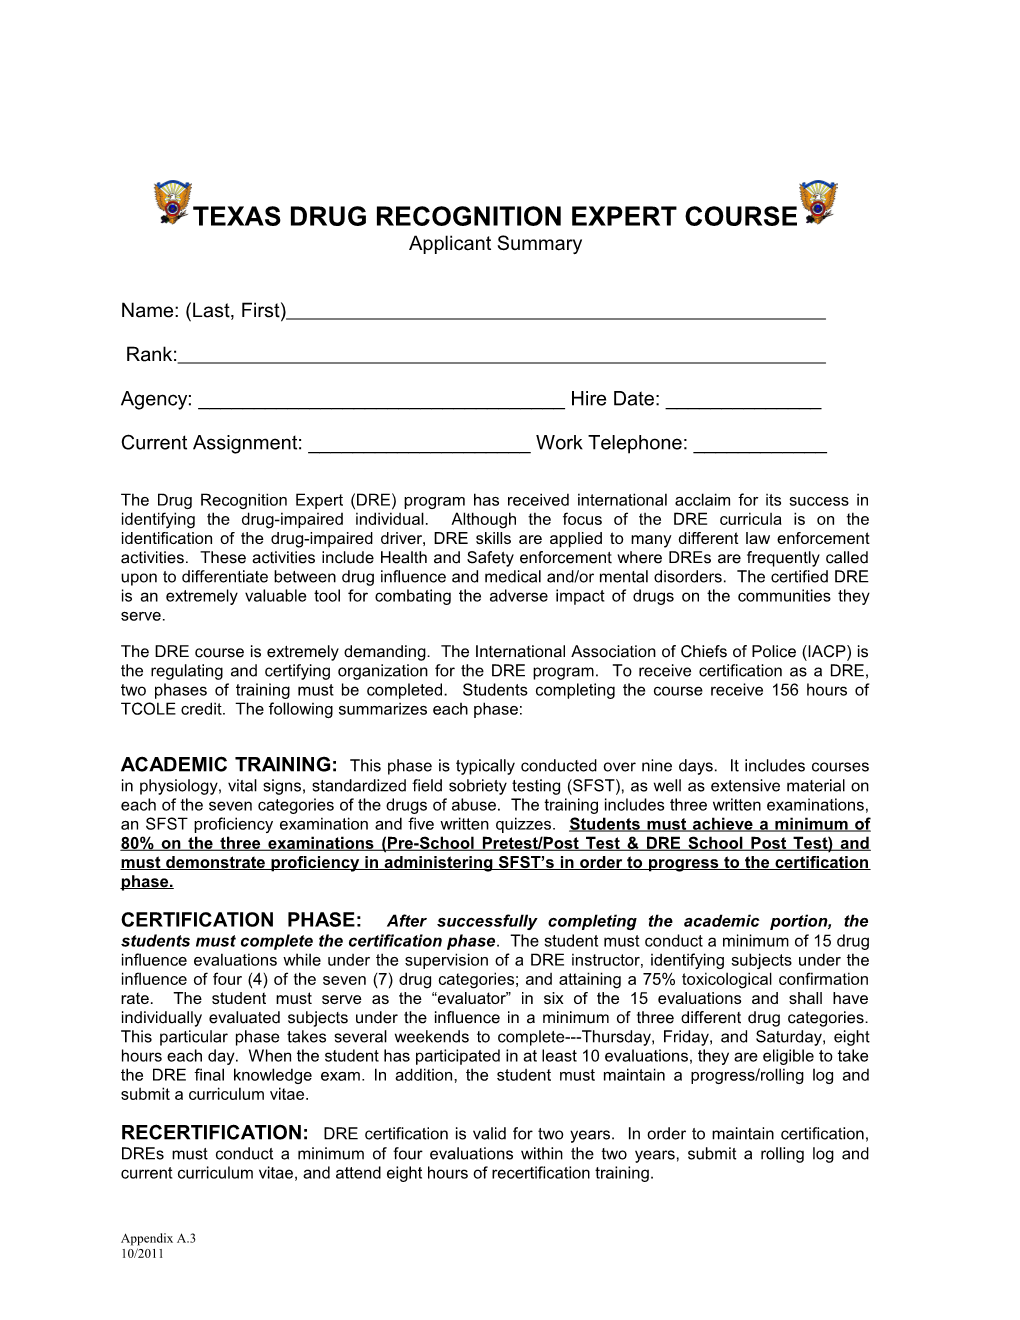 Texas Drug Recognition Expert School